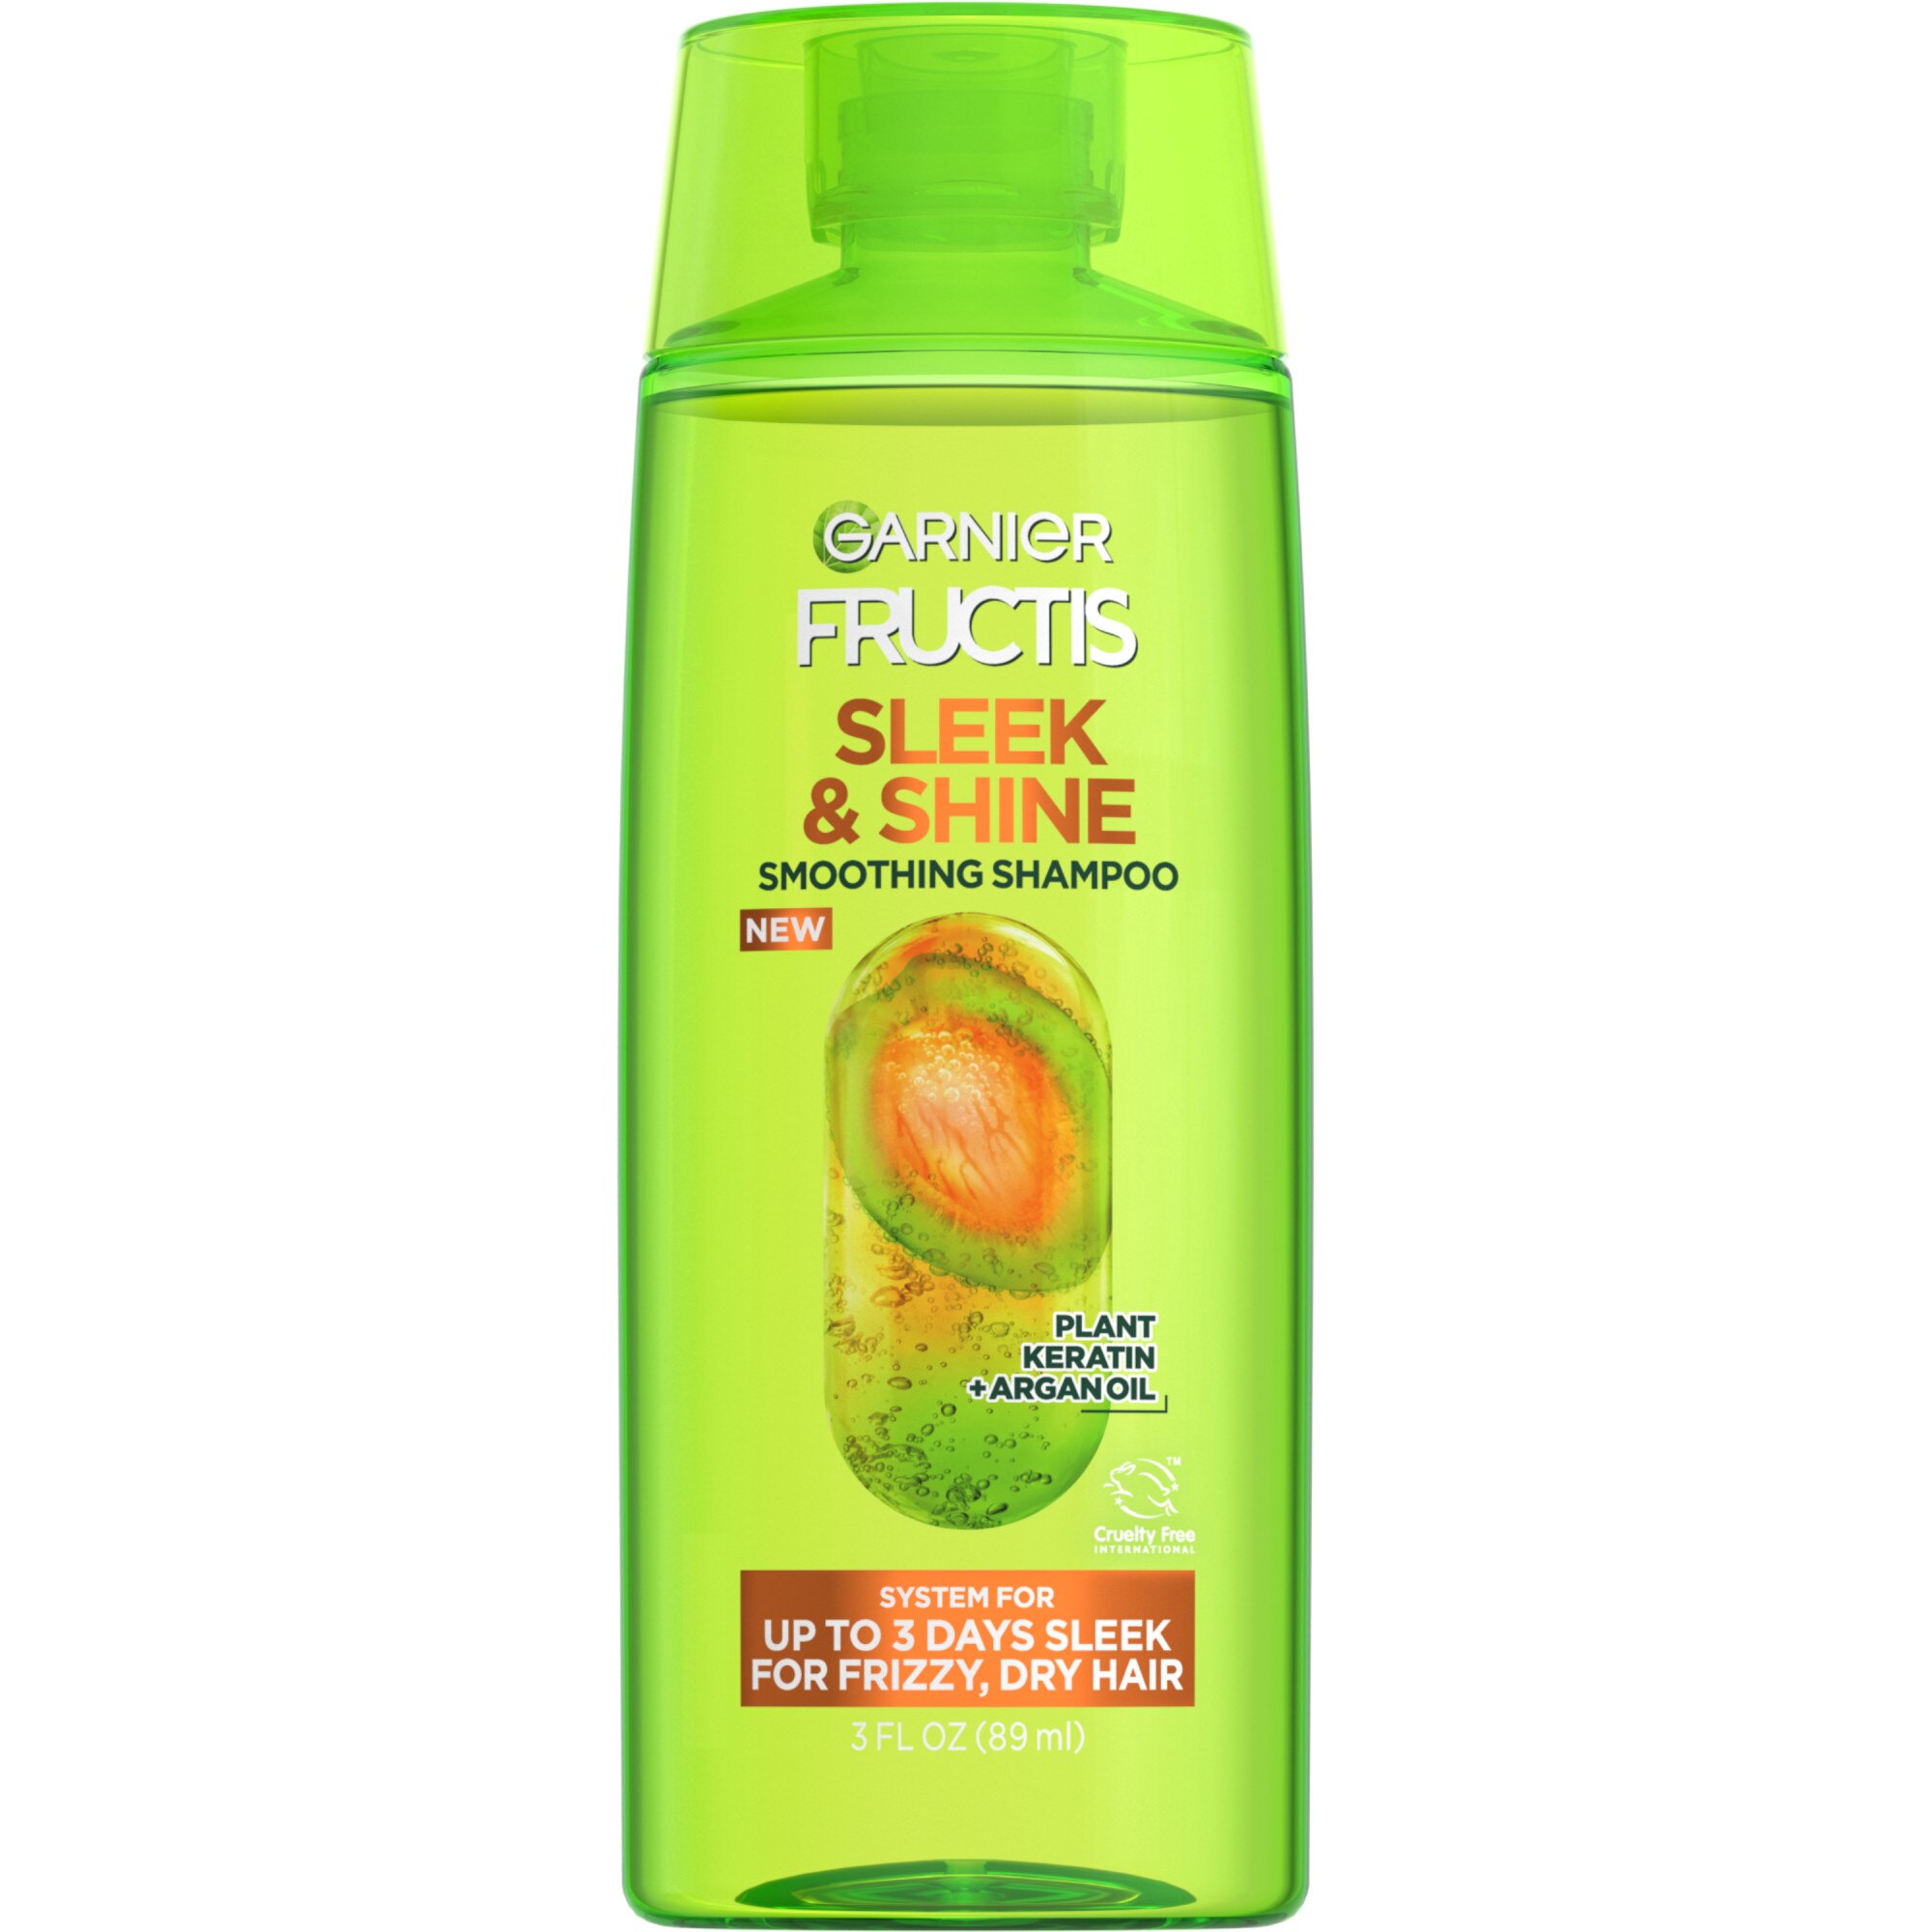 Shine 3 Fructis Sleek OZ & Garnier Trial Size Shampoo,